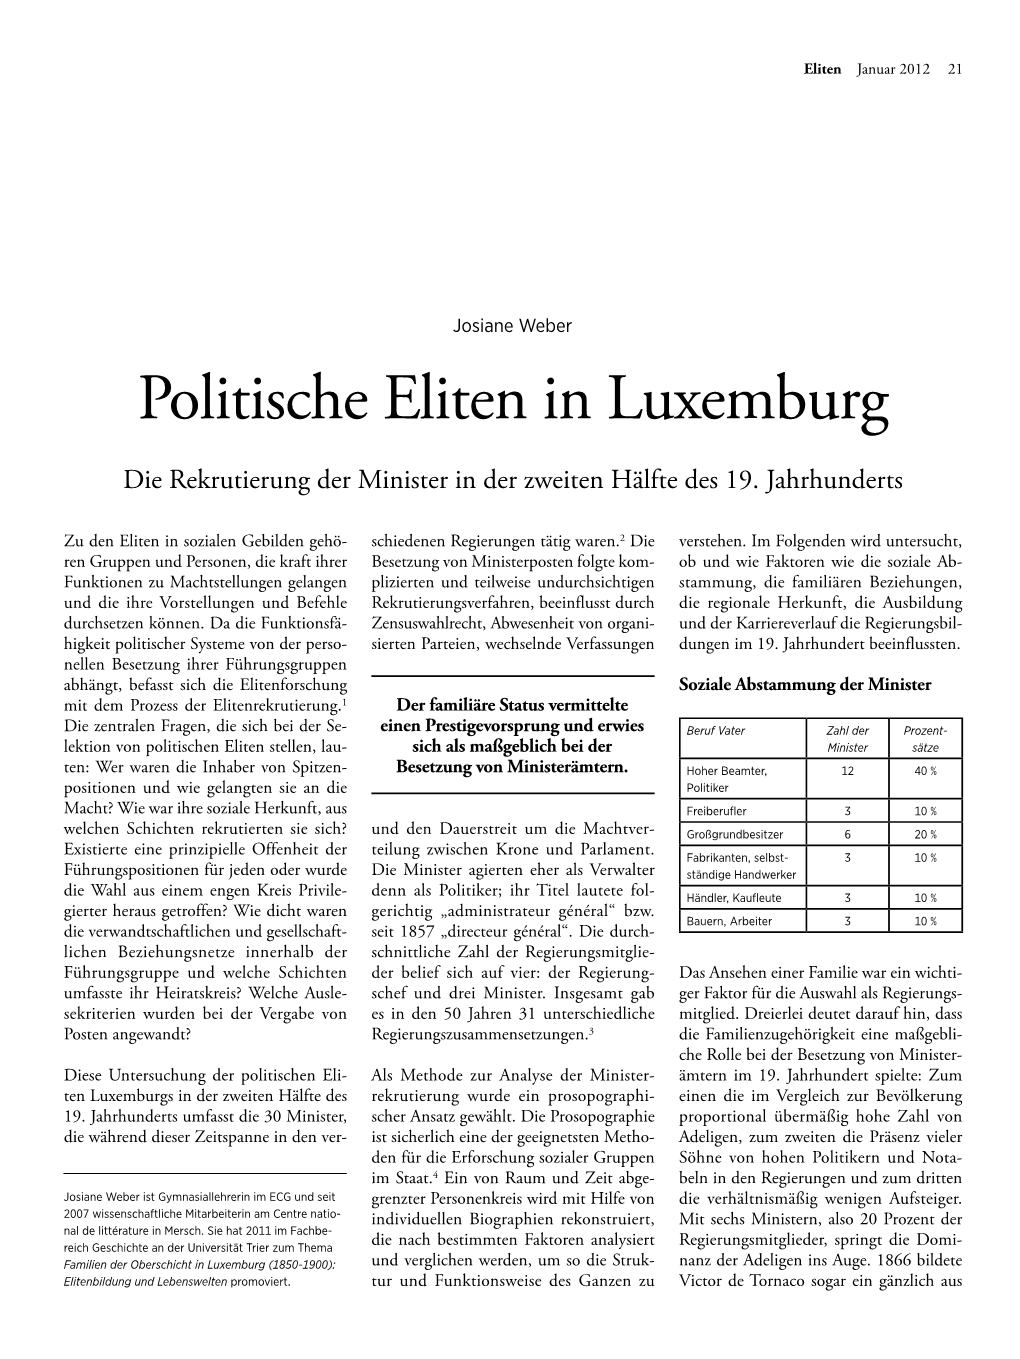 Politische Eliten in Luxemburg